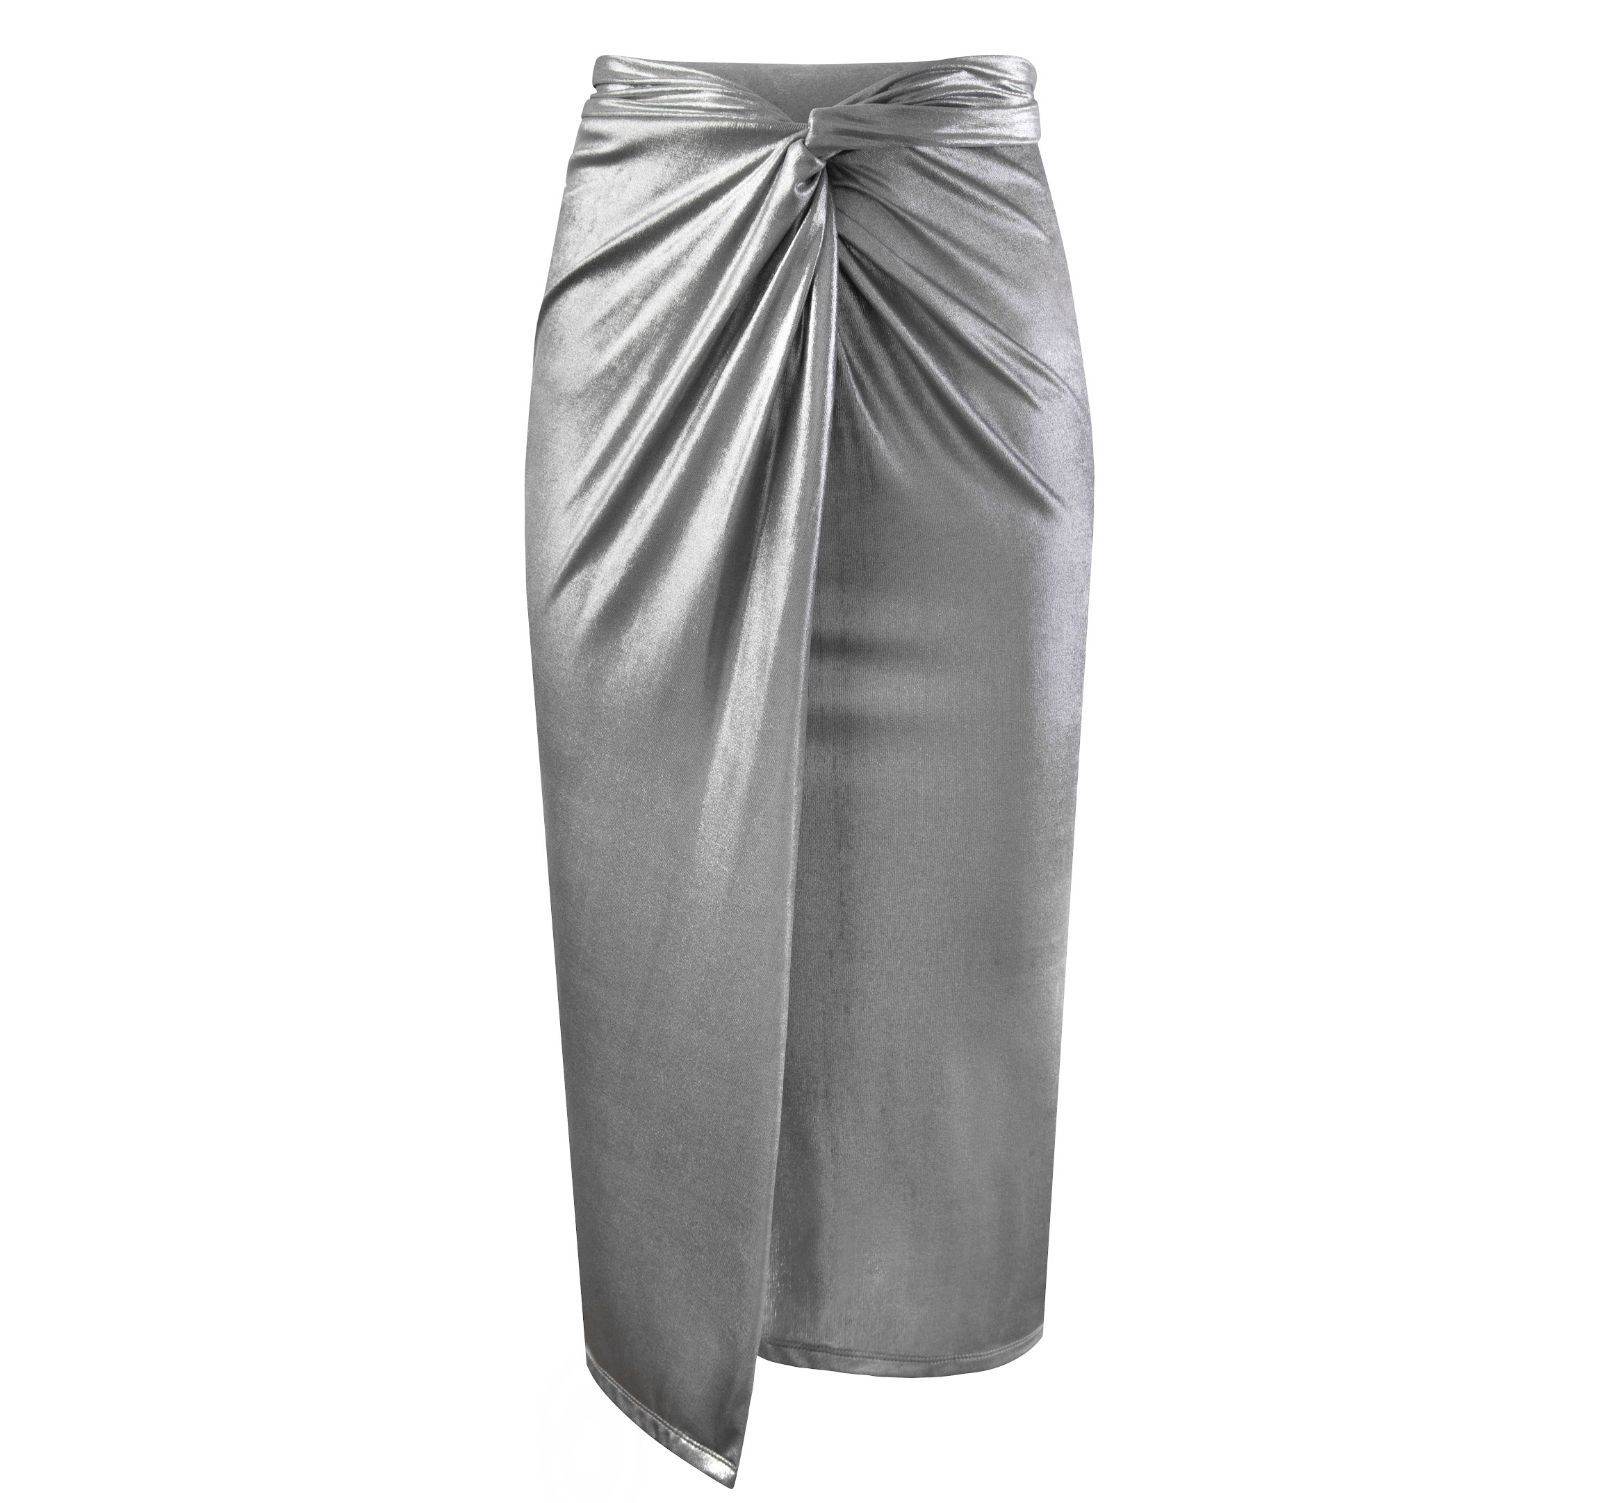 Metallic Knotted Skirt